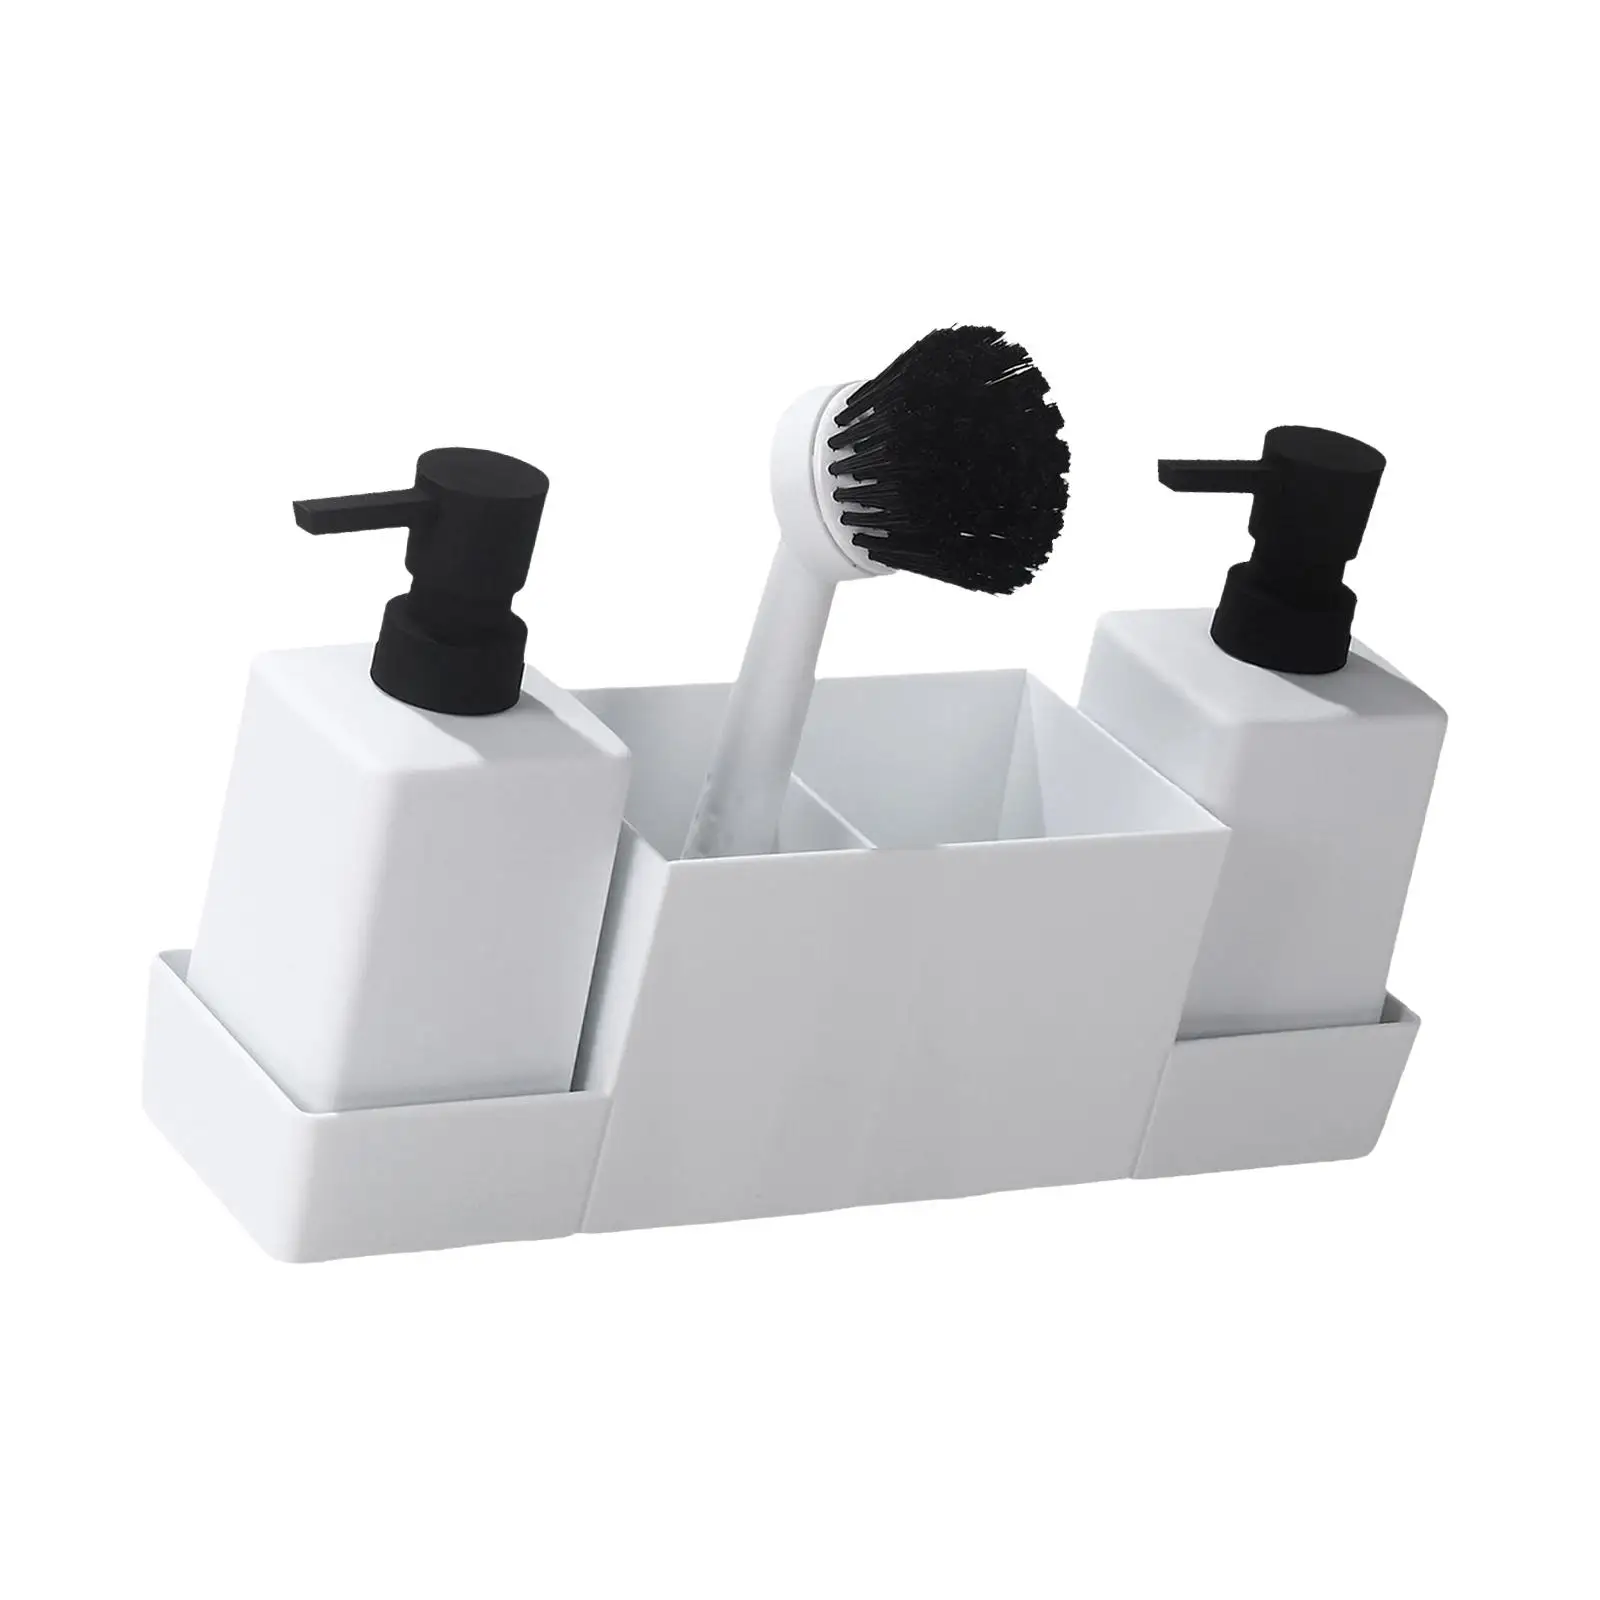 Sink Countertop Liquid Hand Soap Dispenser with Storage Tray for Sponges Scrubbers Non Slip Sink Caddy Organizer Pump Bottle